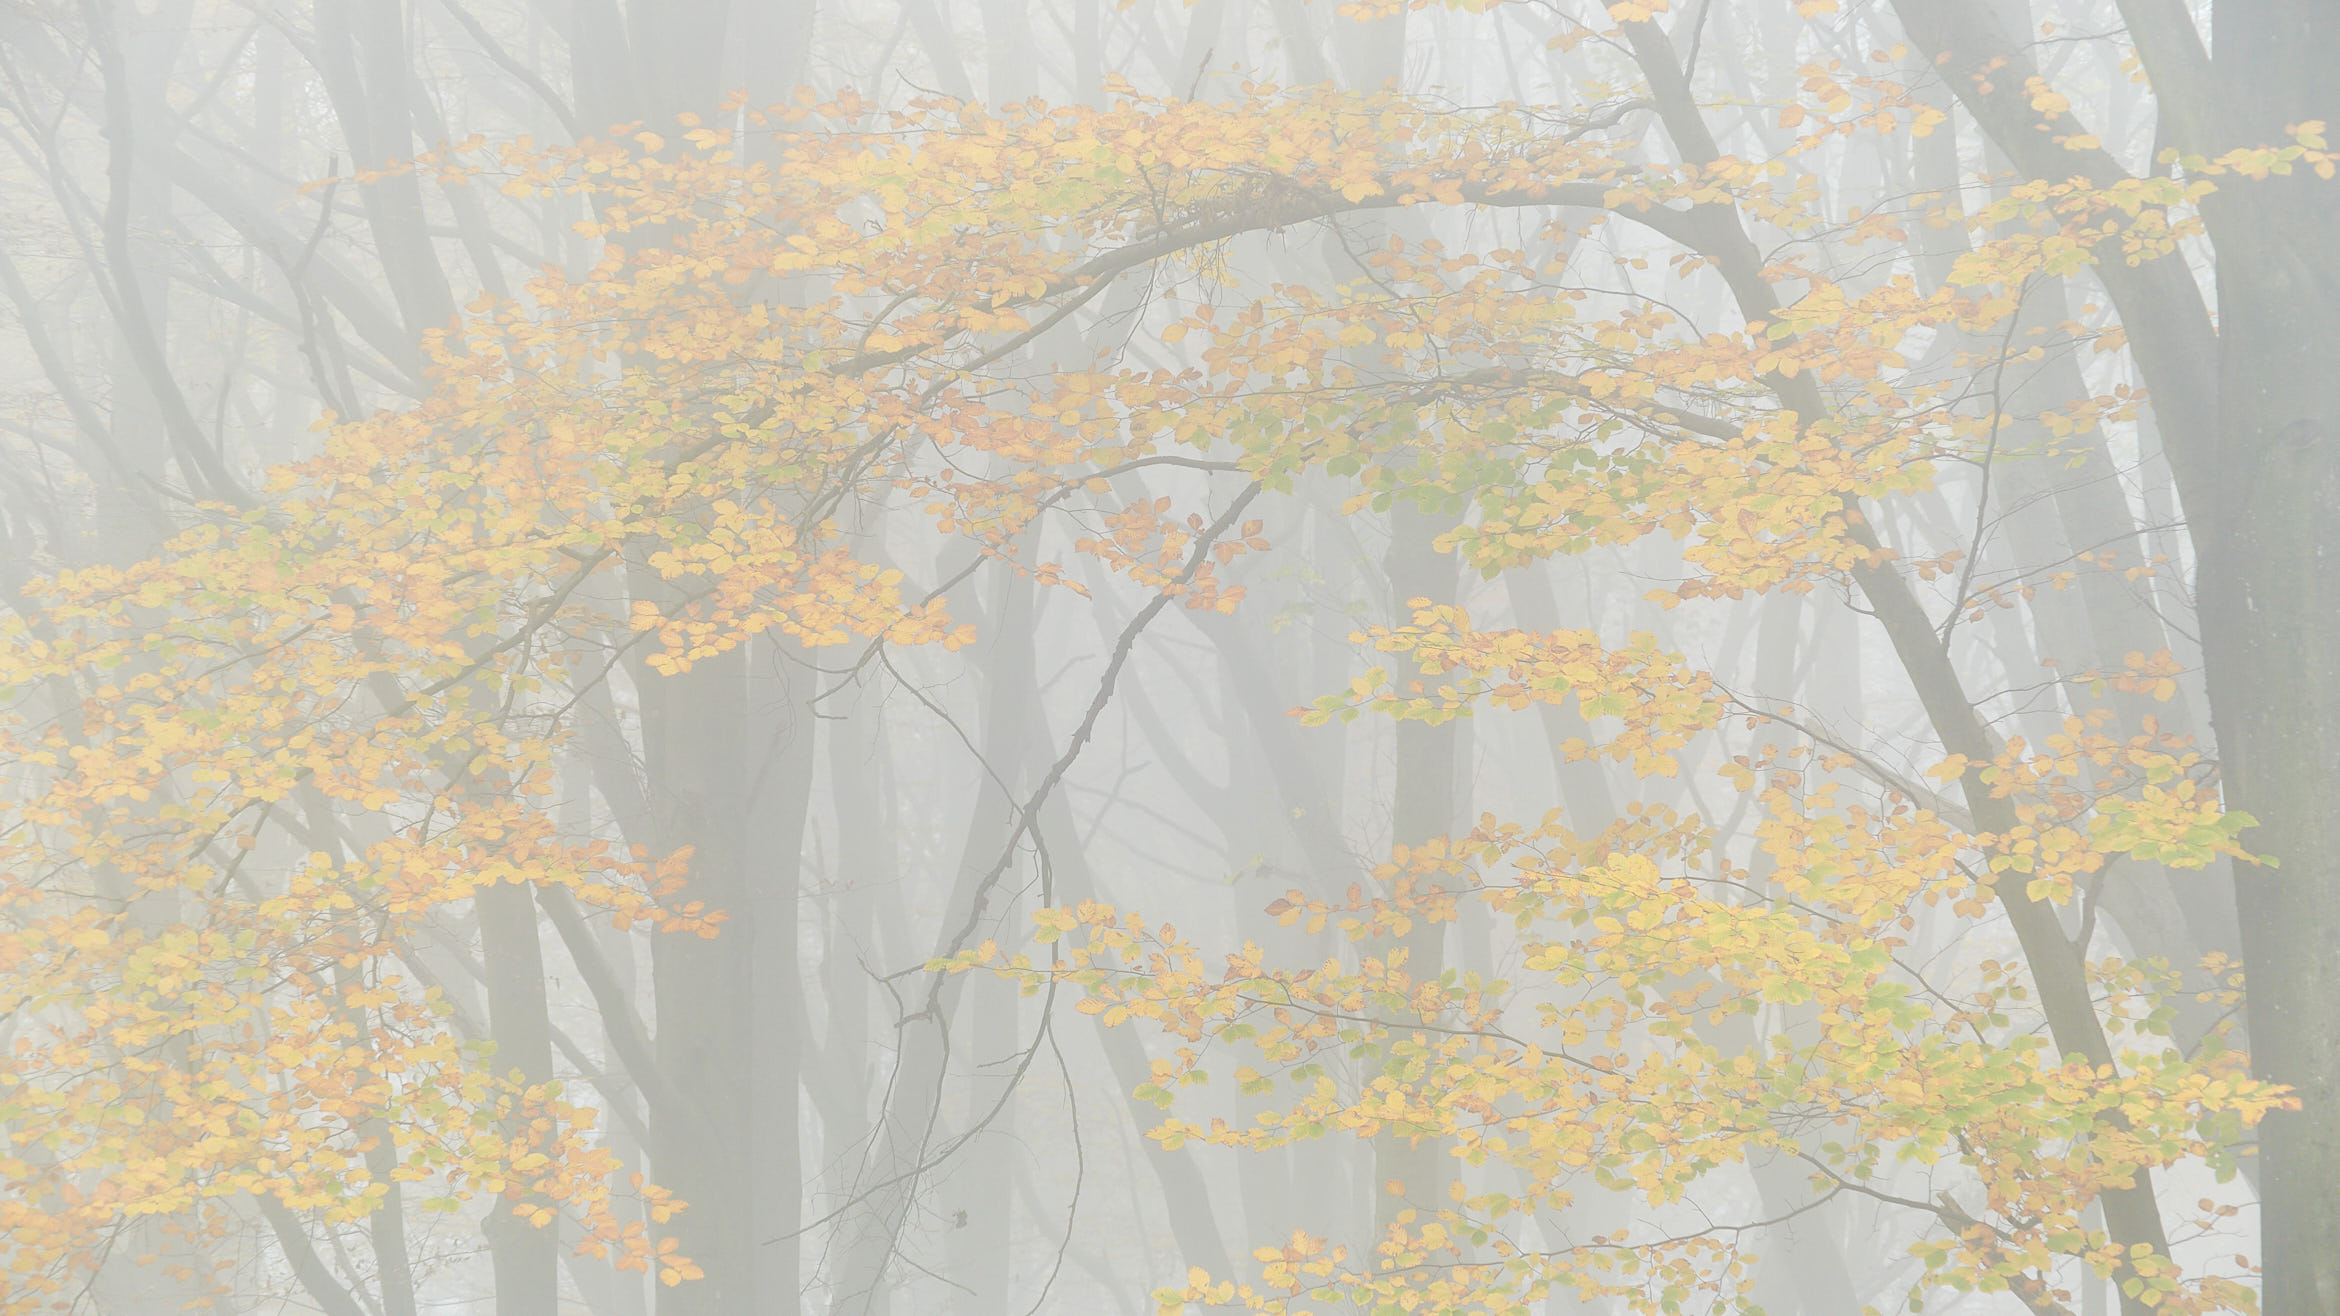 Beech leaves in mist #1 / High Stone Gallery / © Ian Daisley